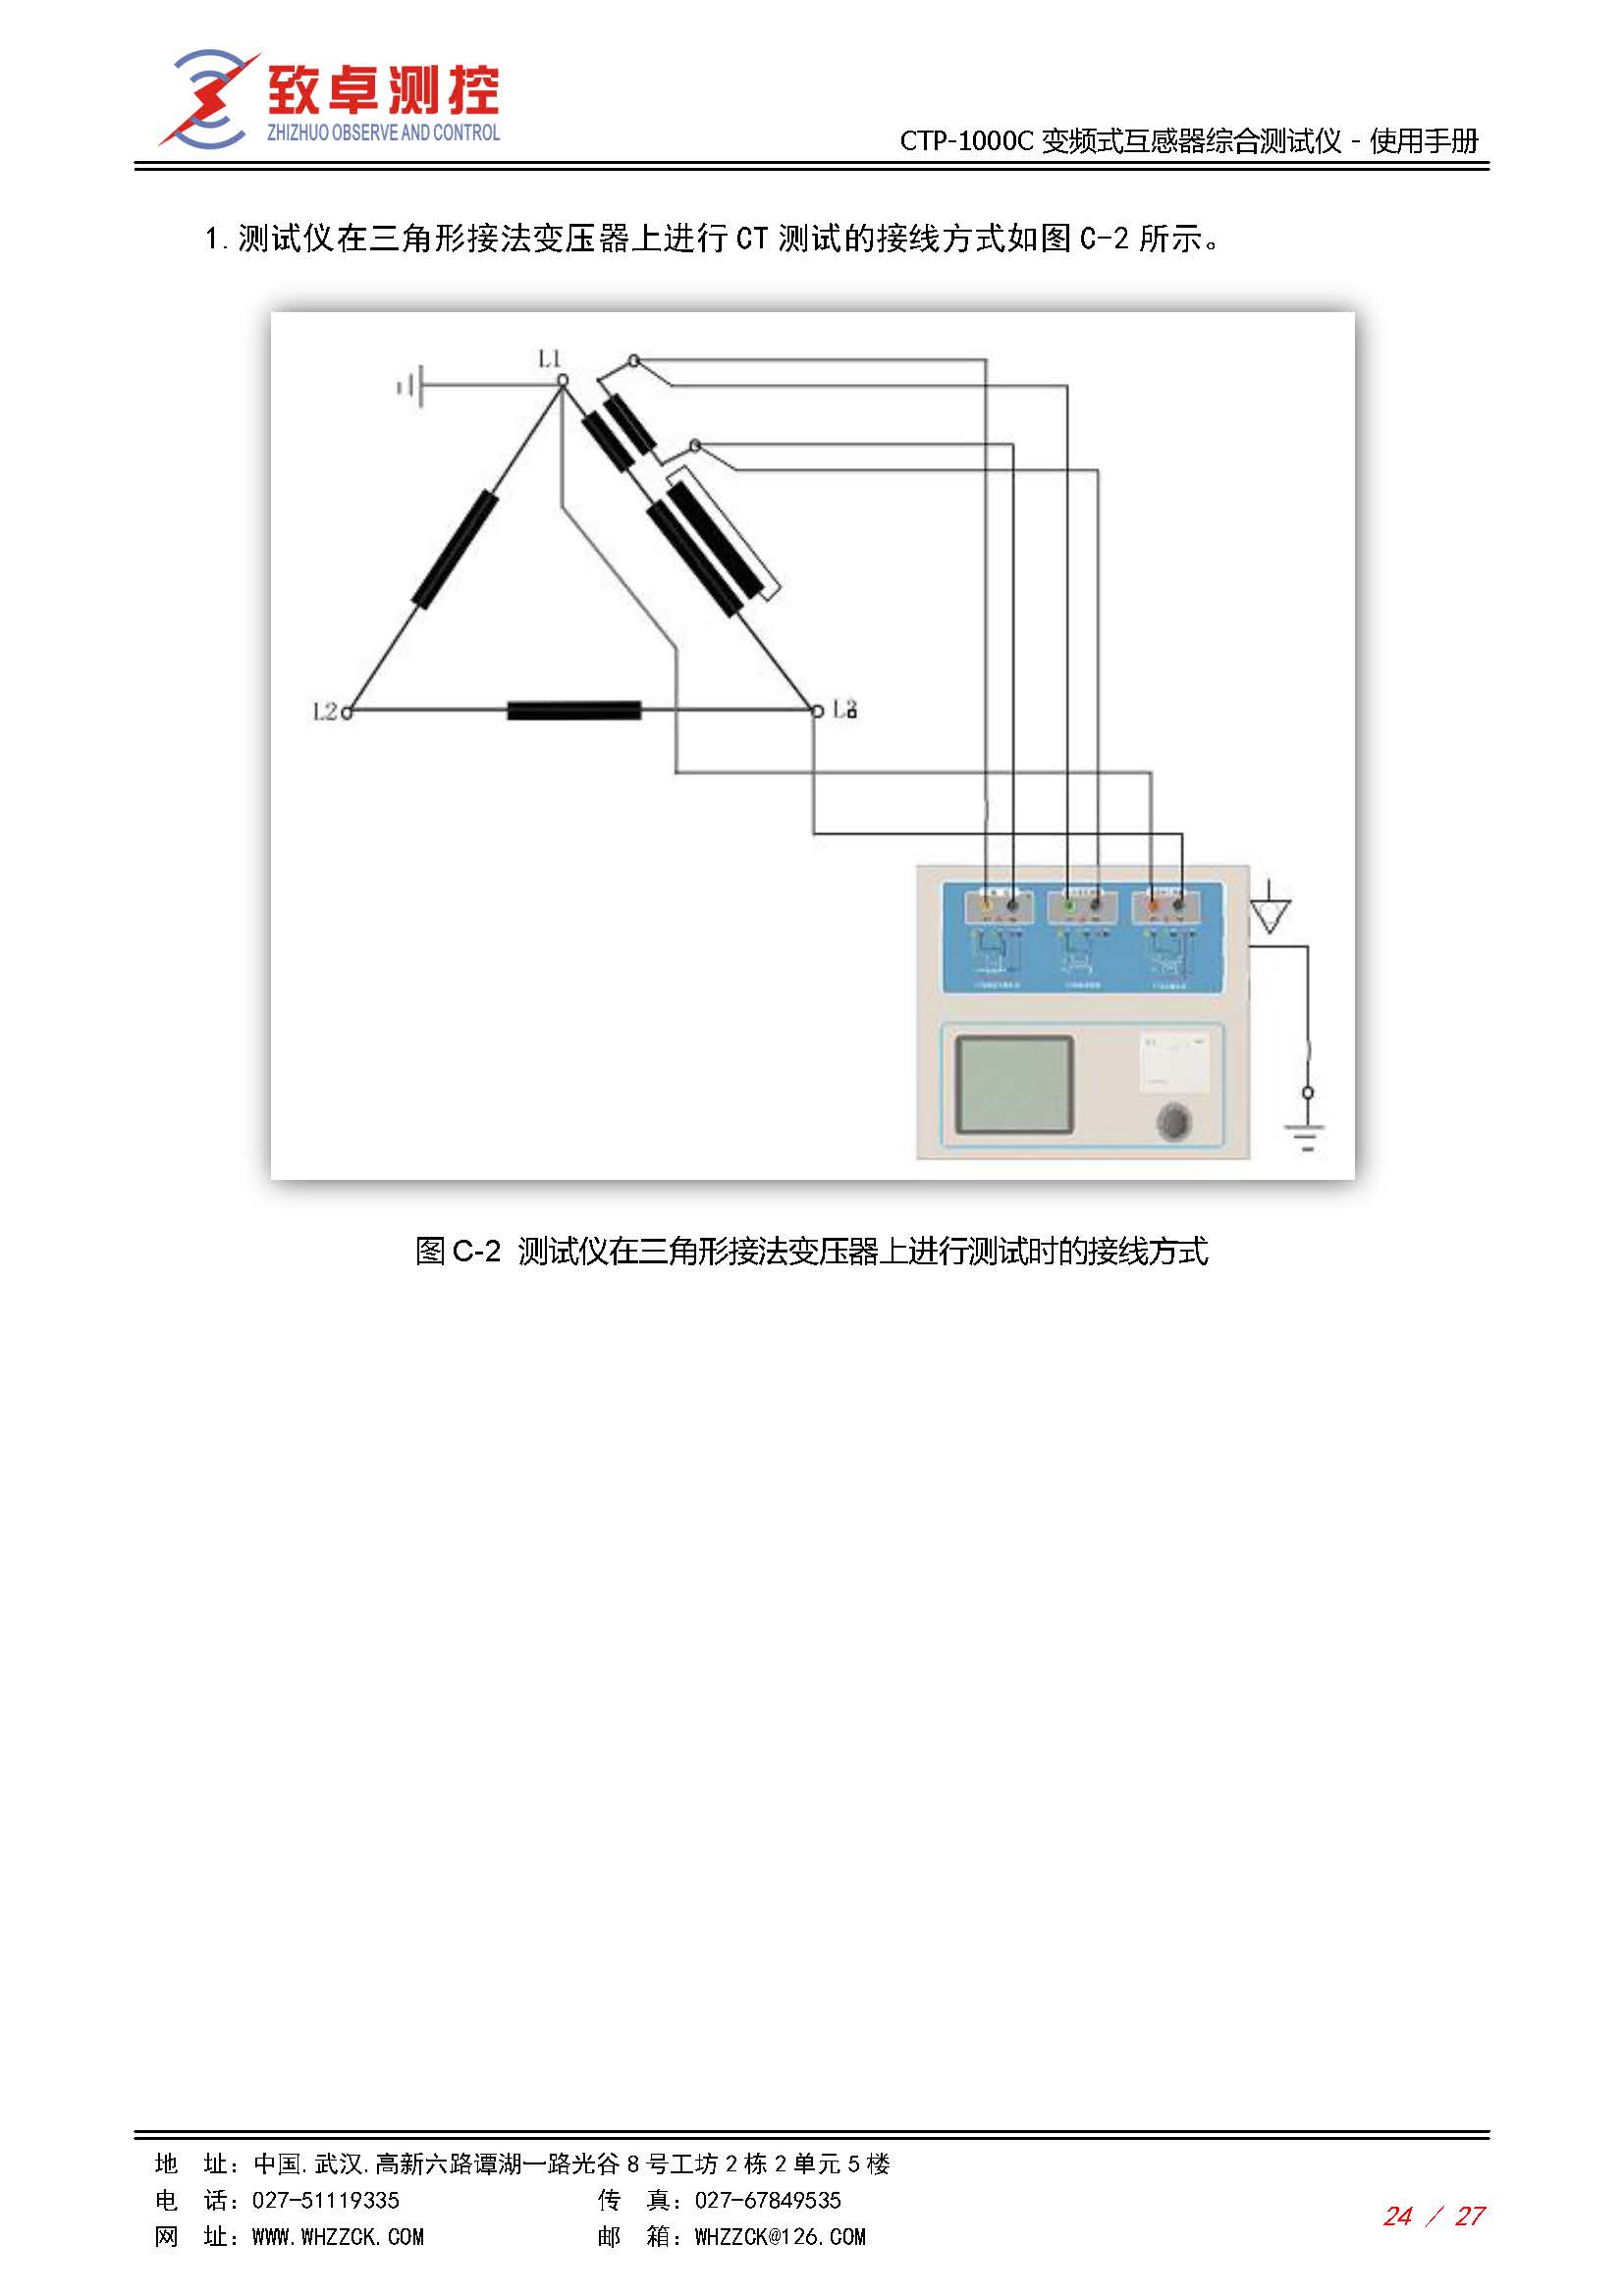 CTP-1000C 变频式互感器综合测试仪使用说明书(图24)